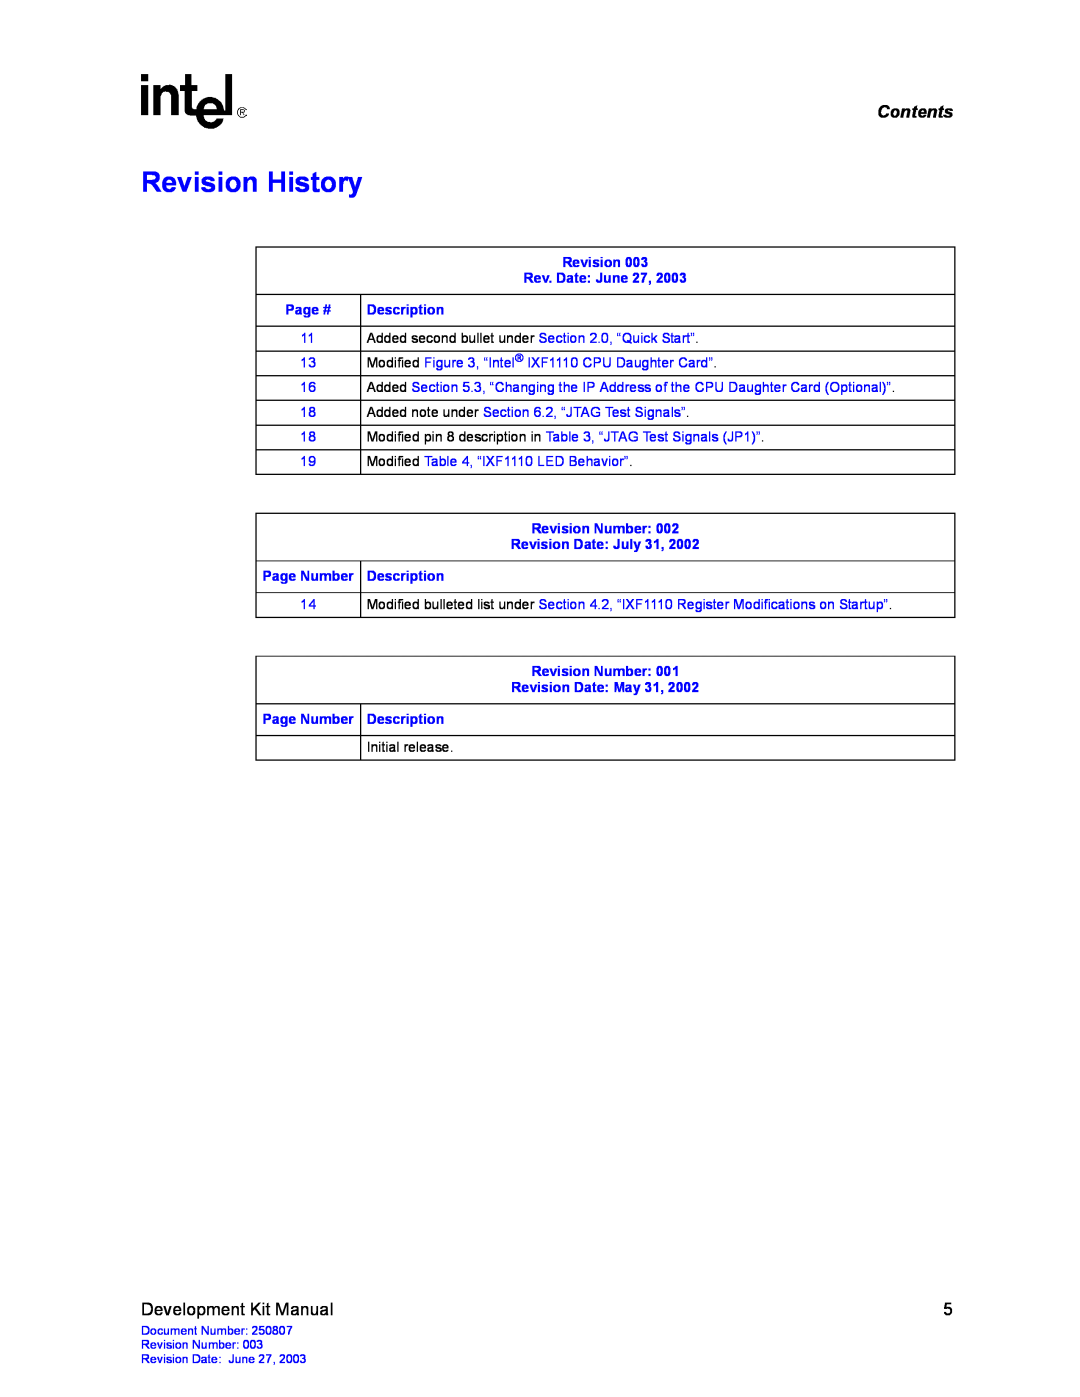 Intel IXD1110 manual Revision History, Contents, Development Kit Manual 